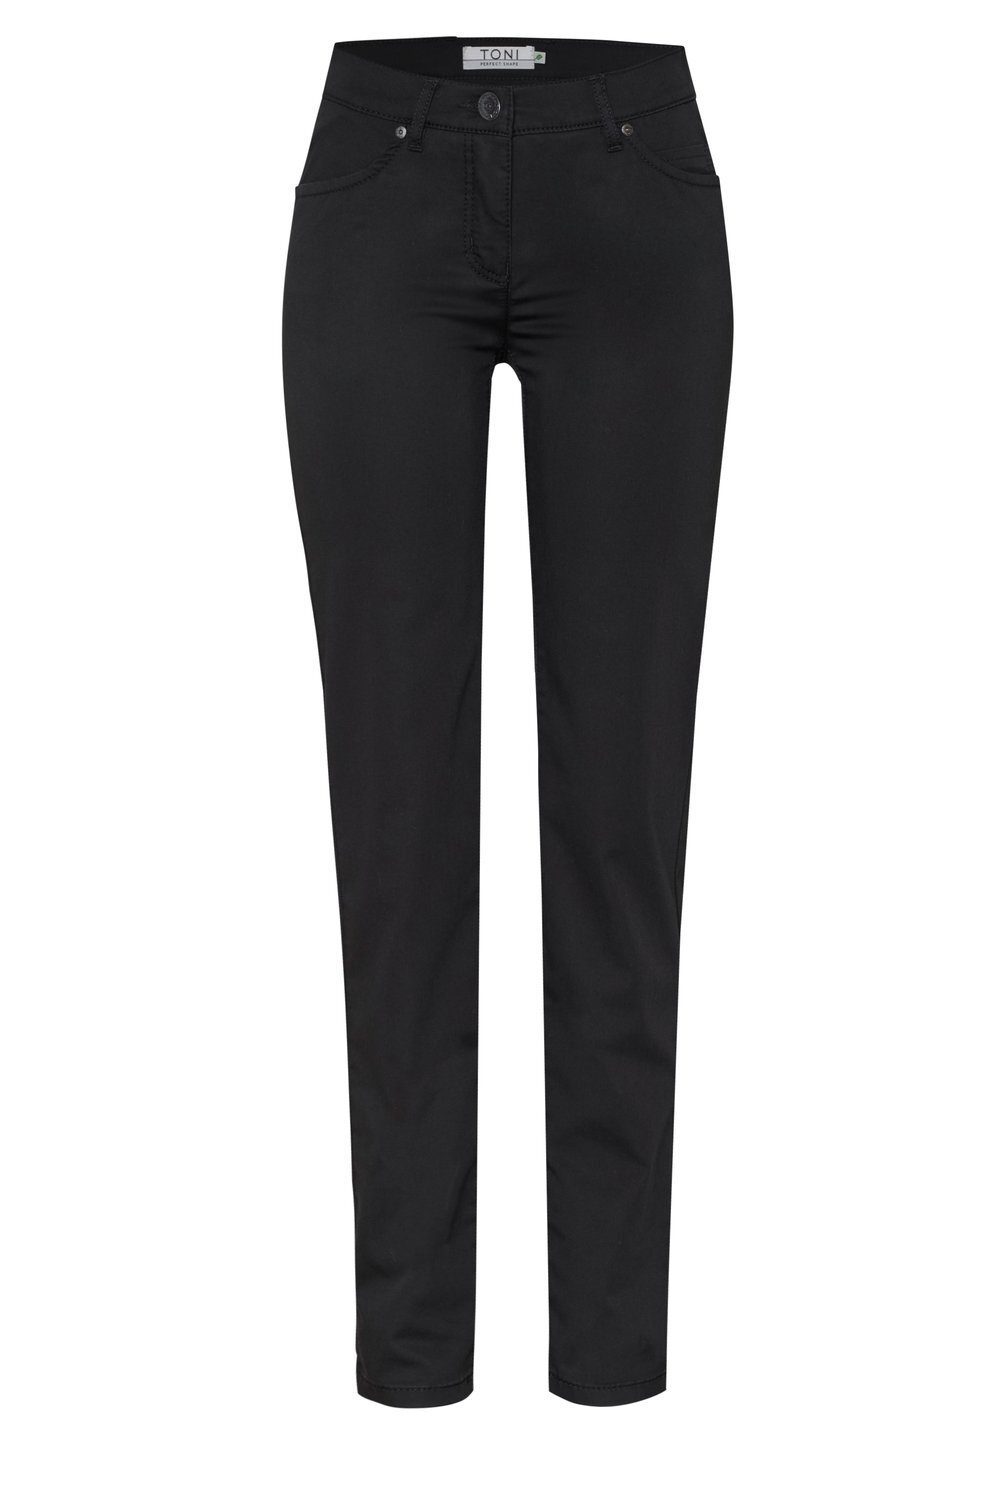 Perfect TONI 5-Pocket-Hose Shape 089 aus softer schwarz - Baumwolle